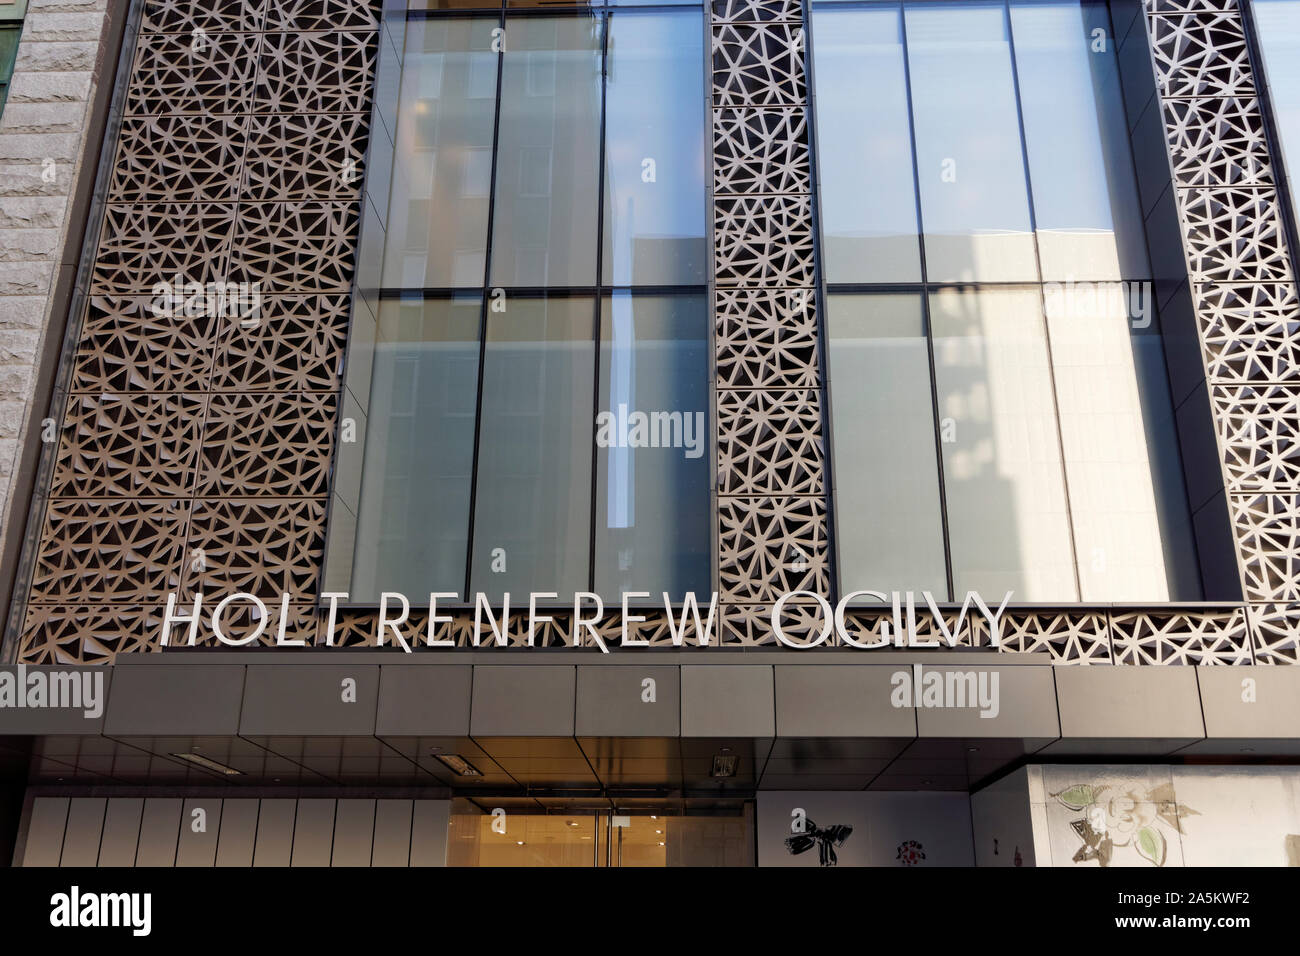 Holt renfrew ogilvy hi-res stock photography and images - Alamy